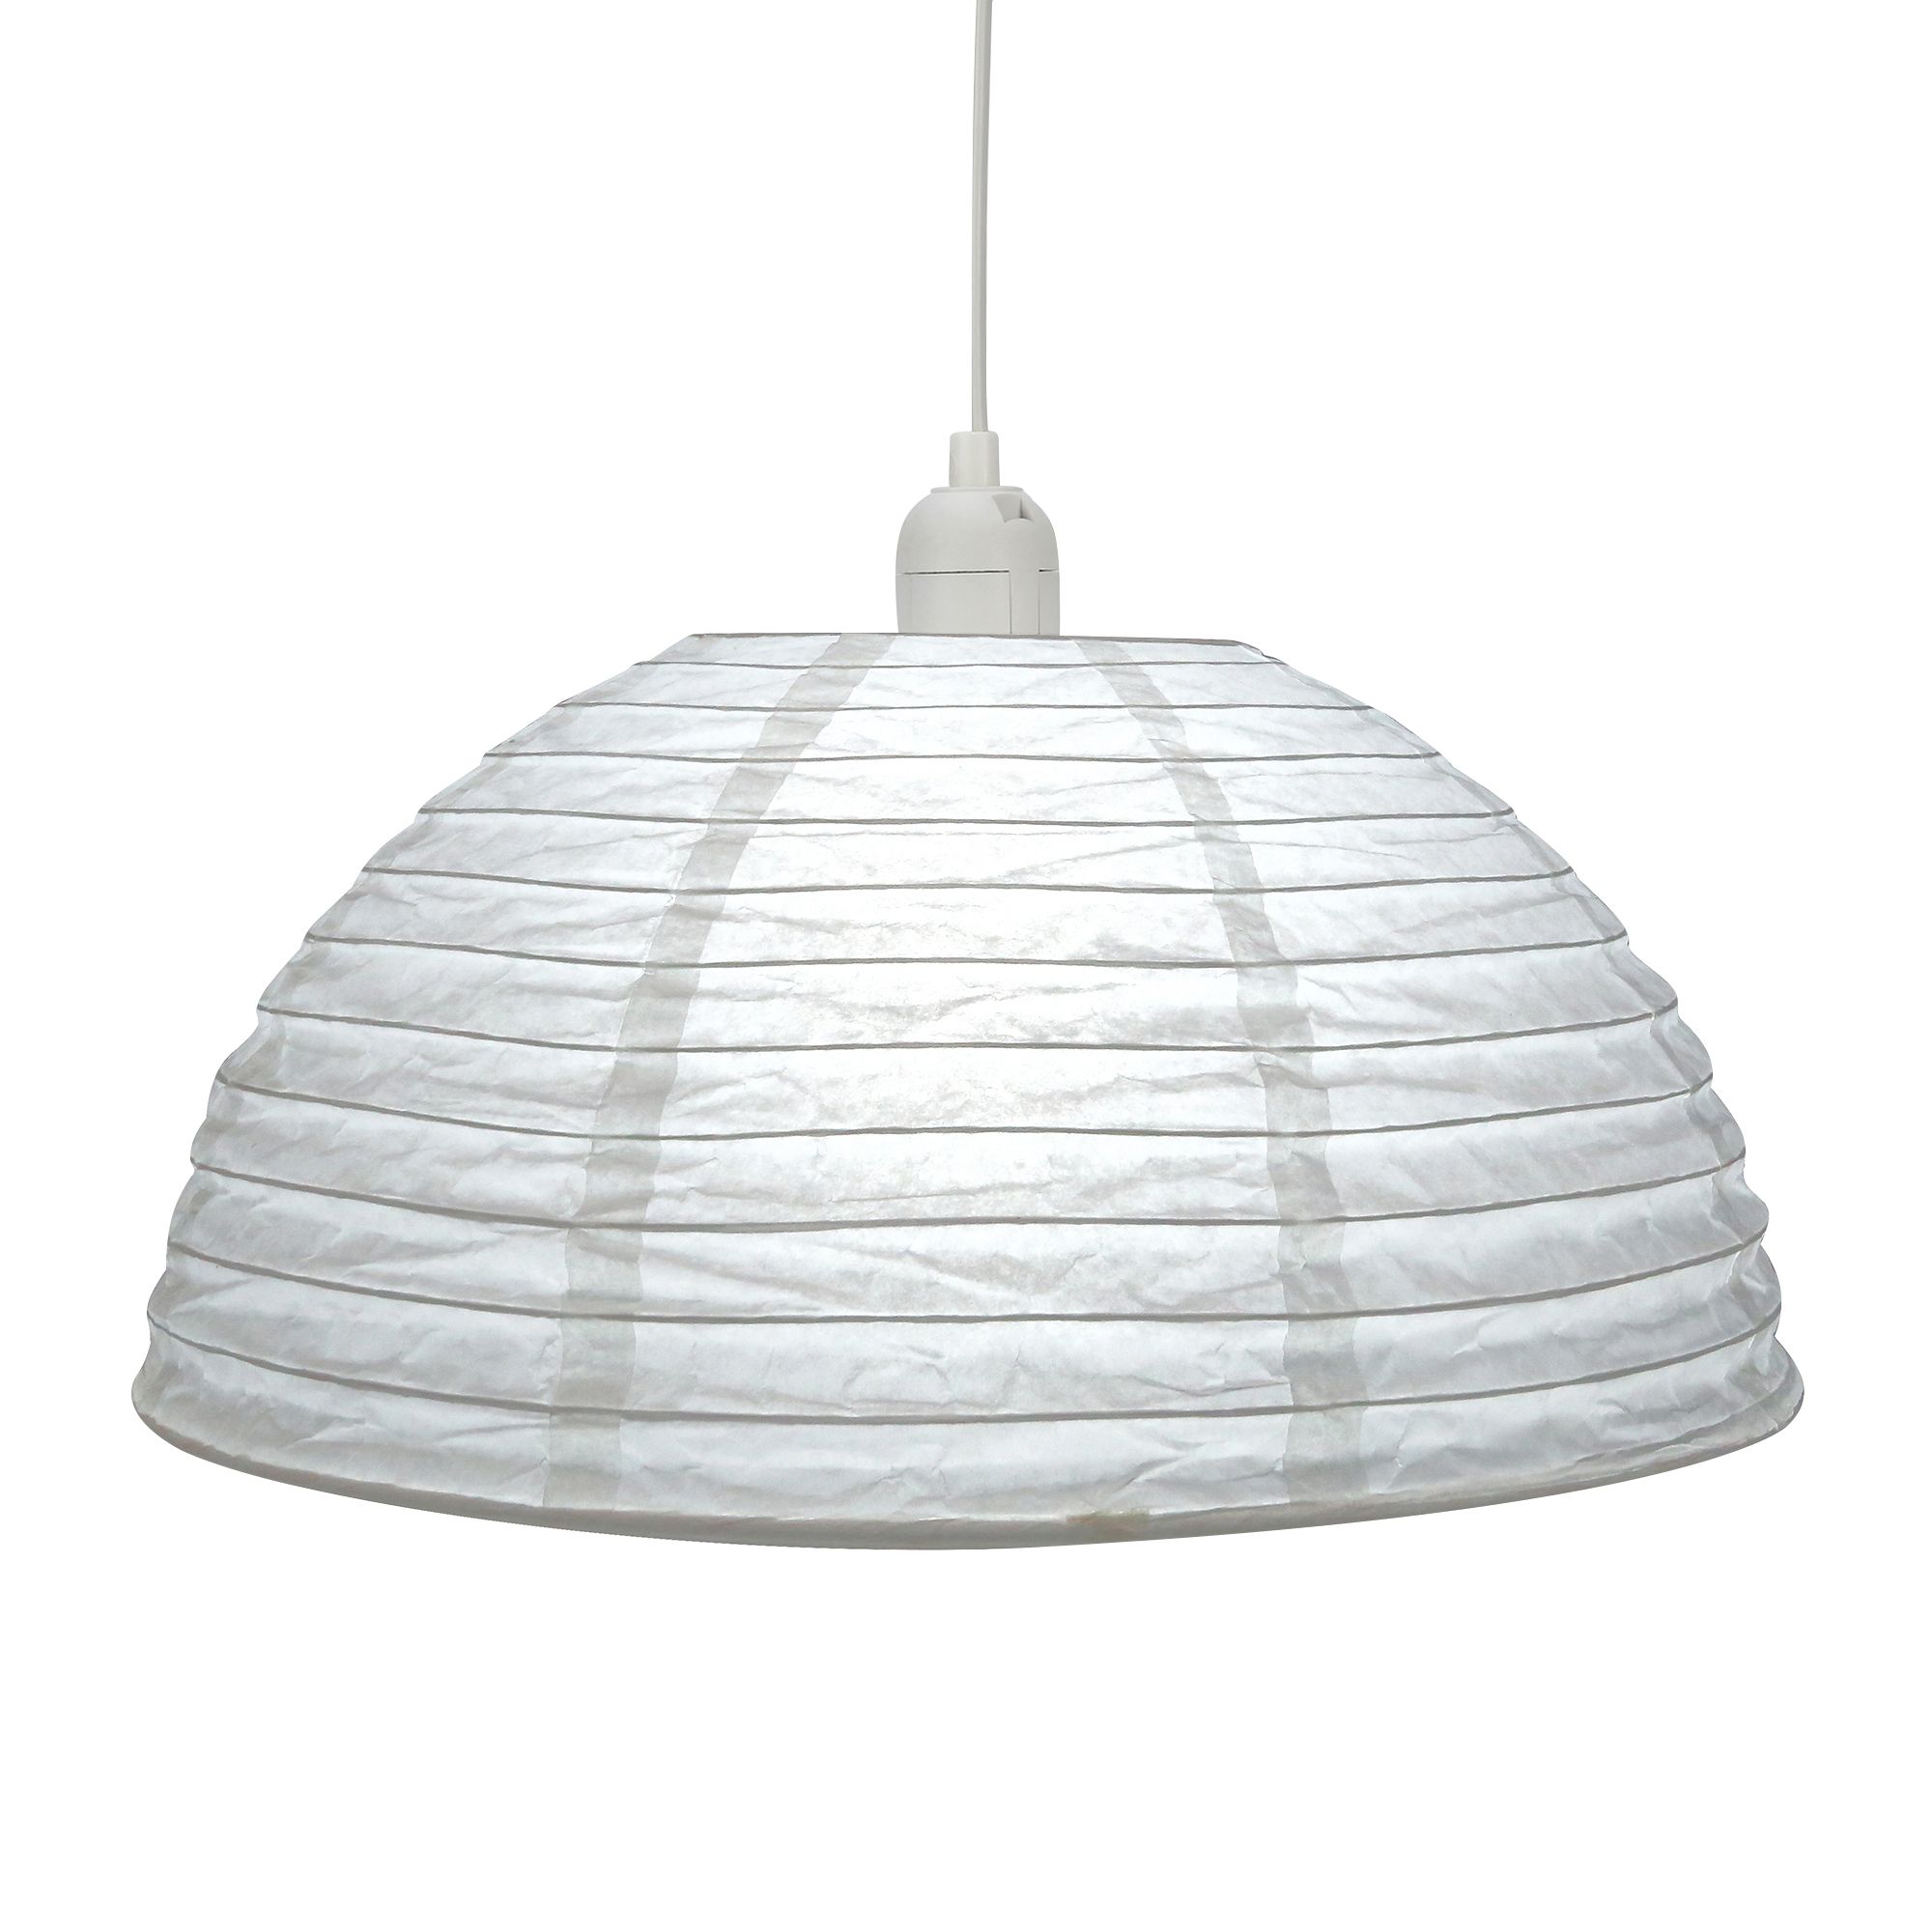 GoodHome Anbus White Pendant Light shade (D)38cm